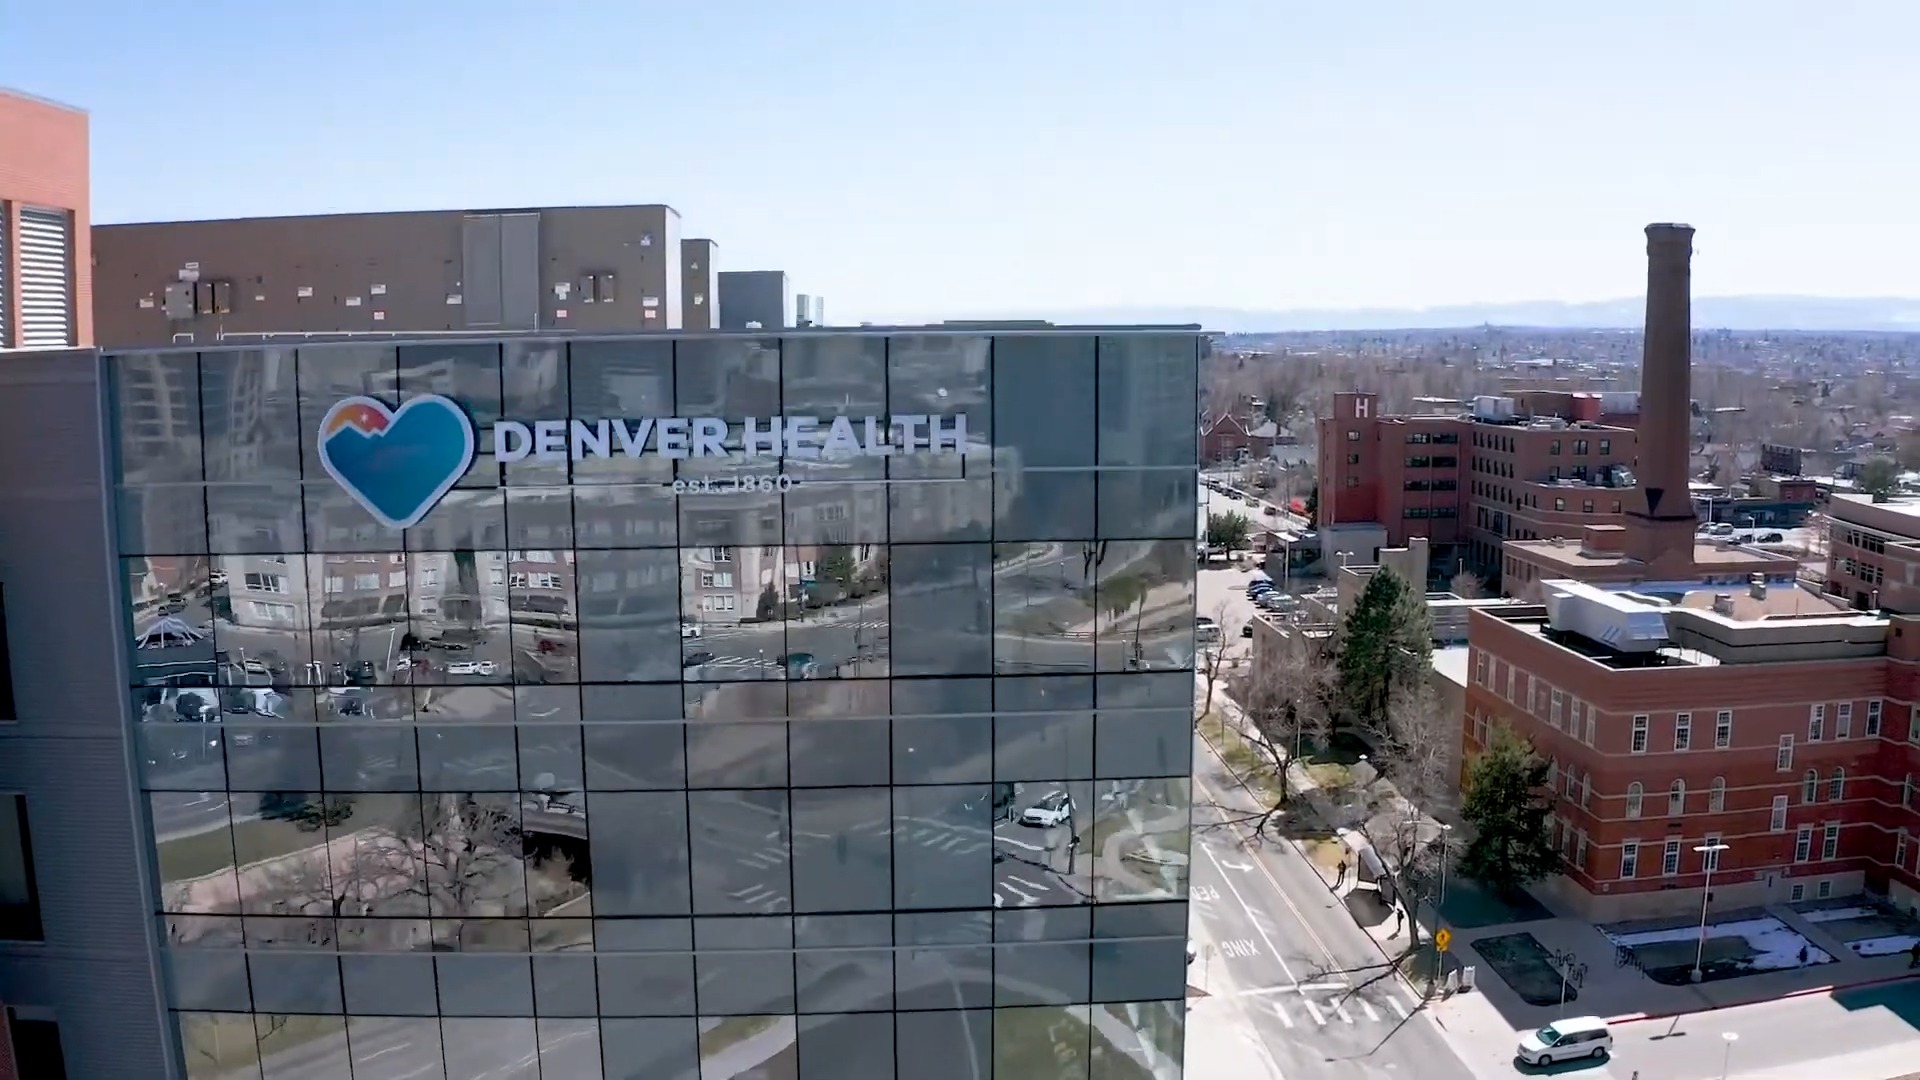 Denver Health